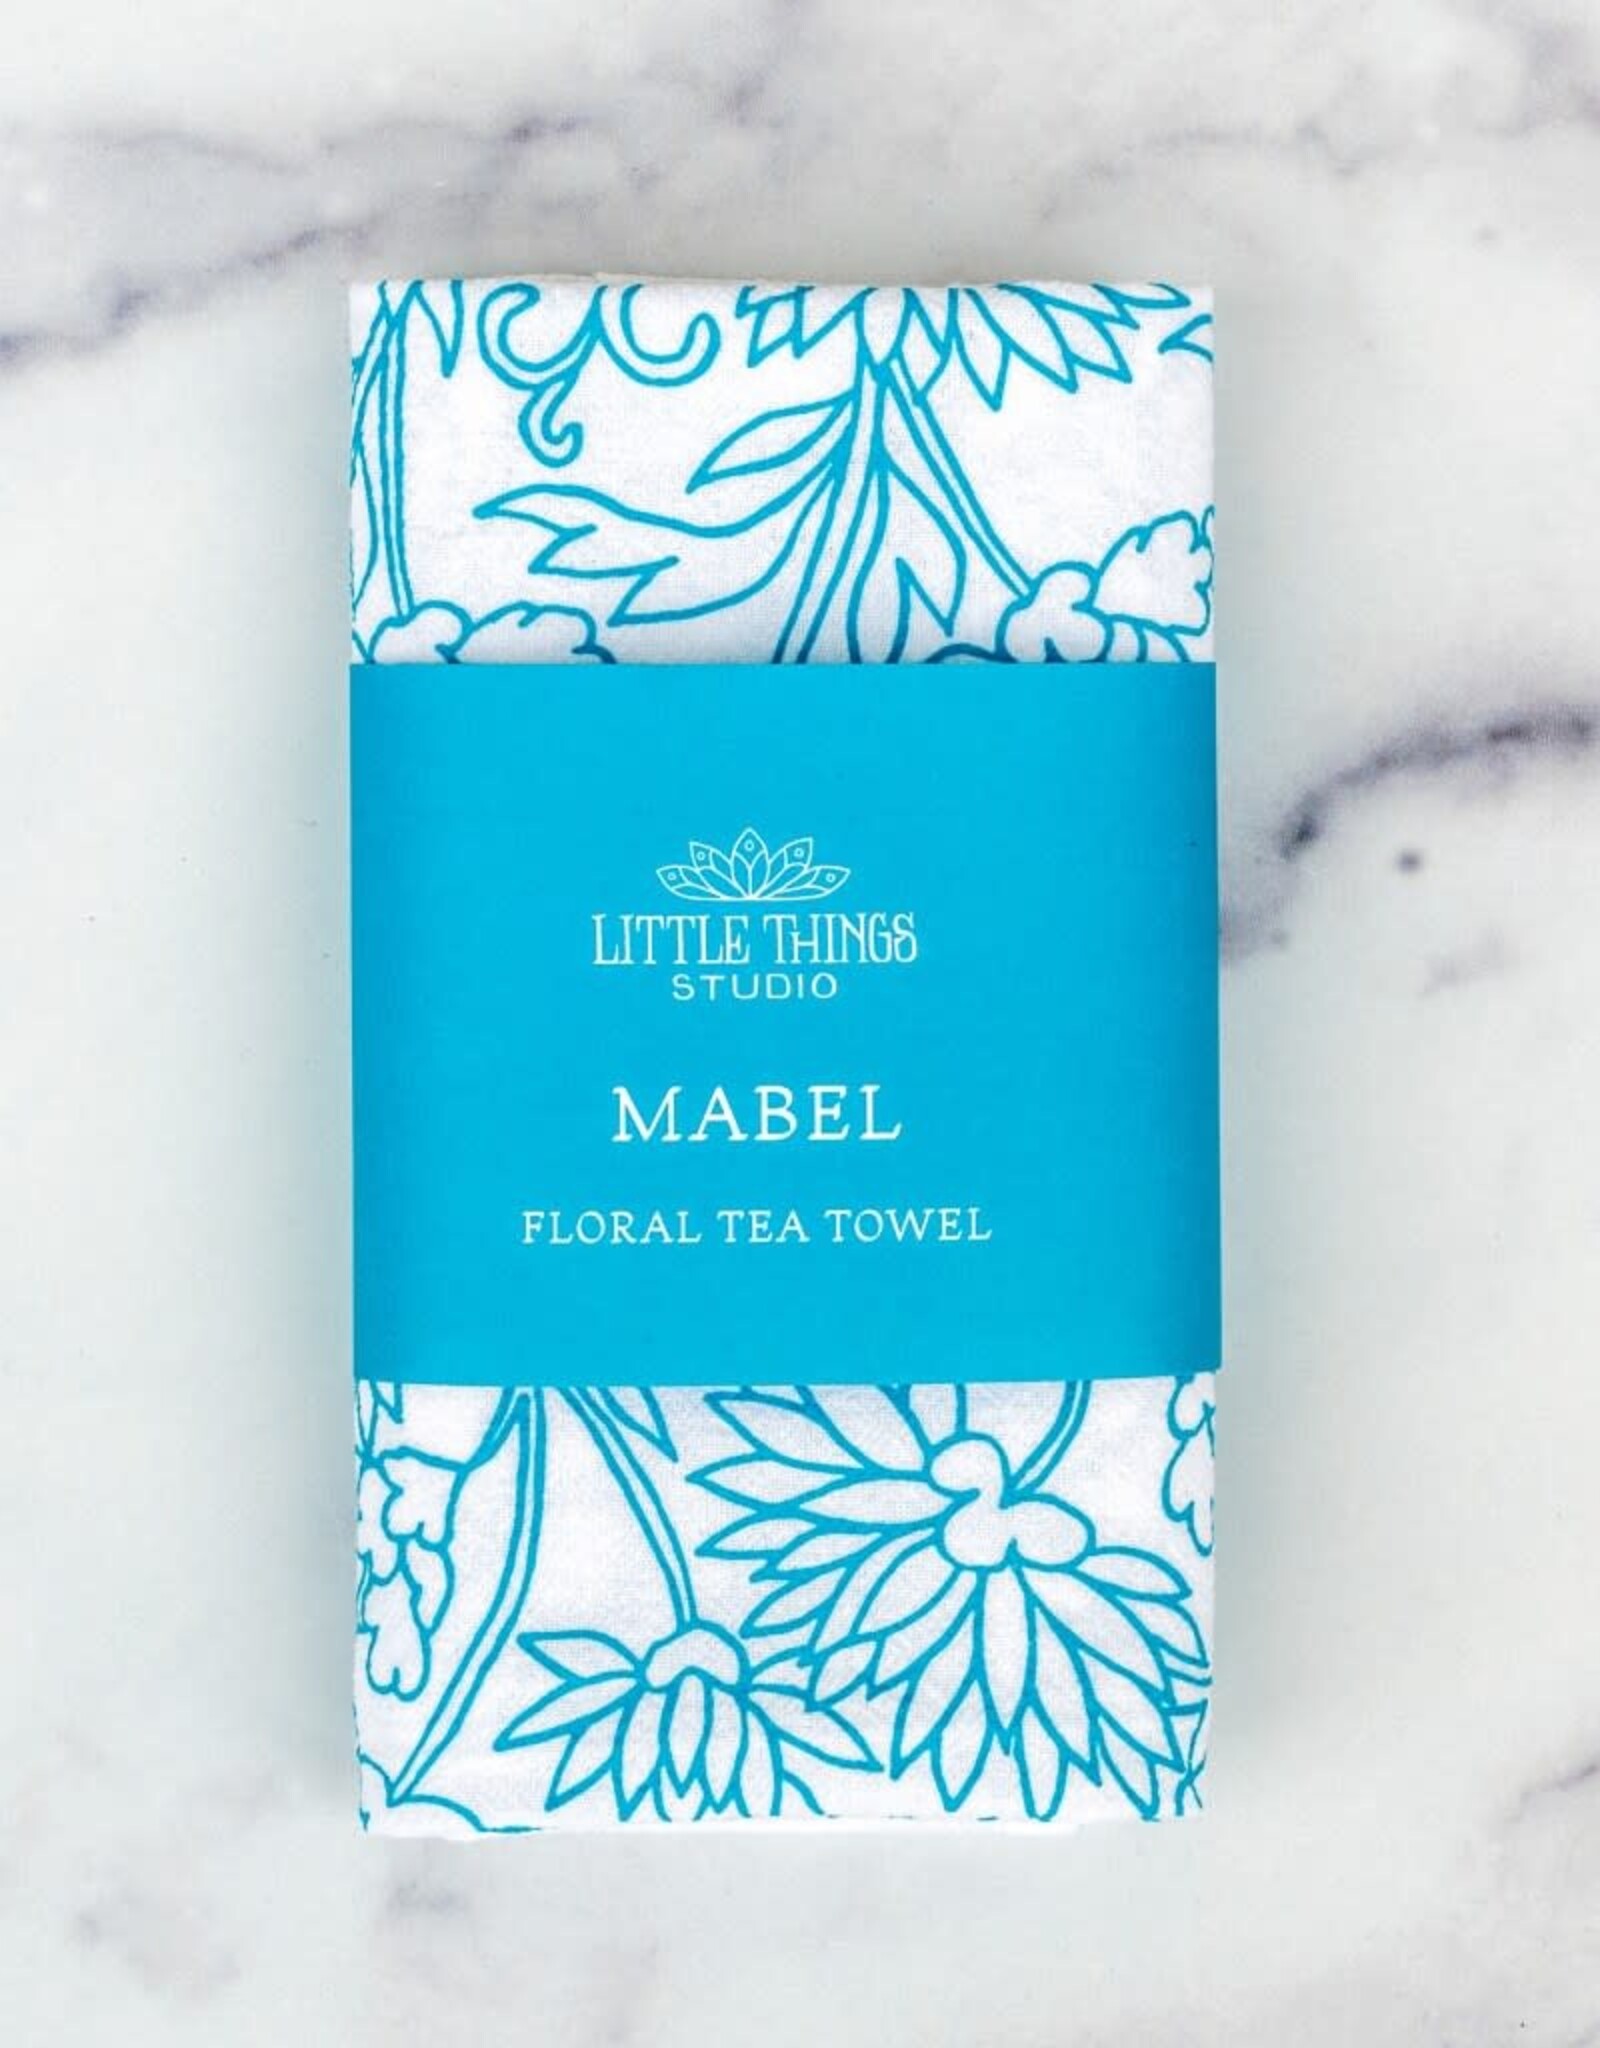 The Mabel Floral Tea Towel